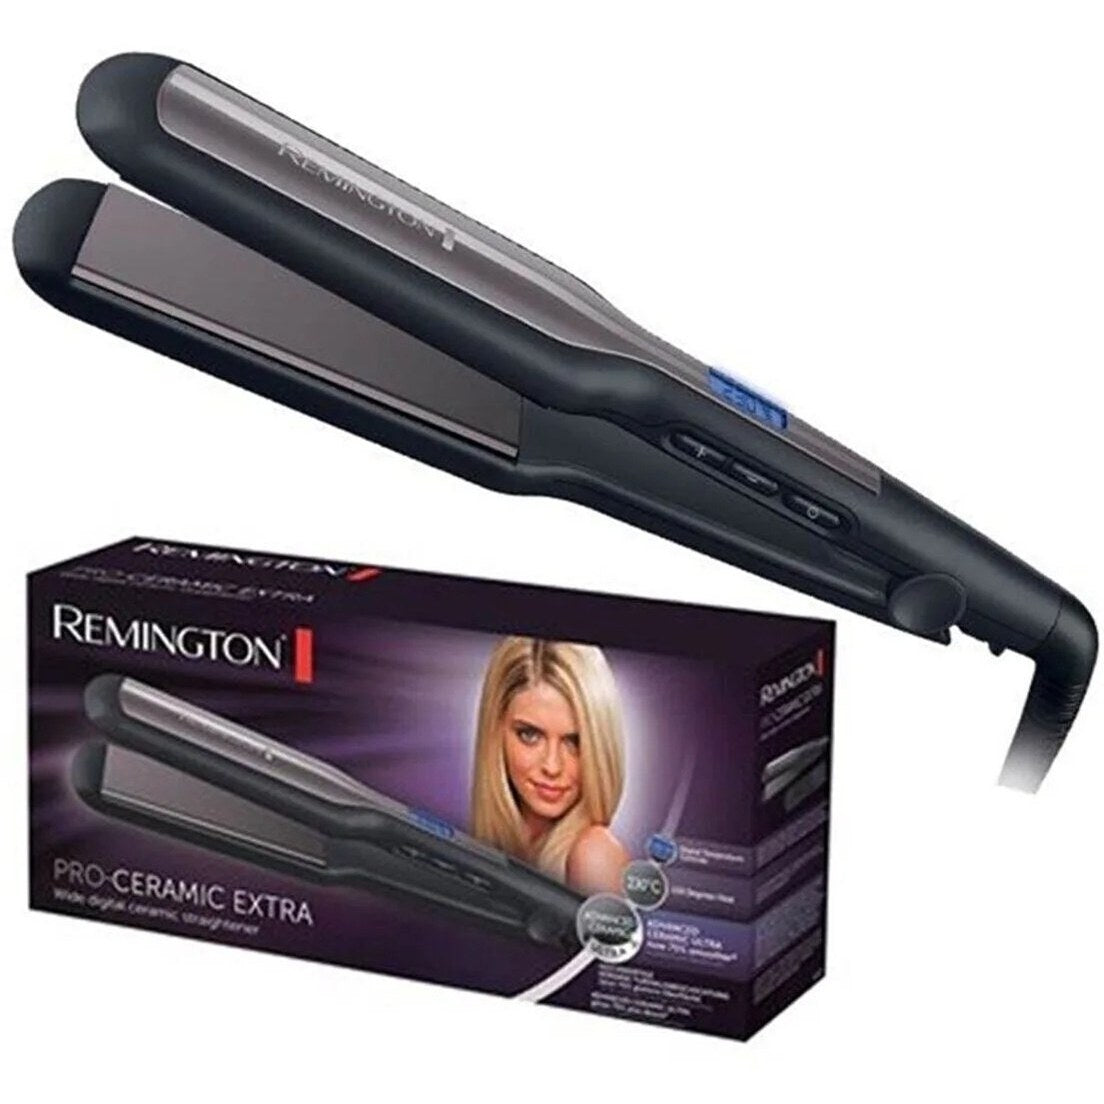 Remington - Pro-Ceramic Extra Hair Straightener